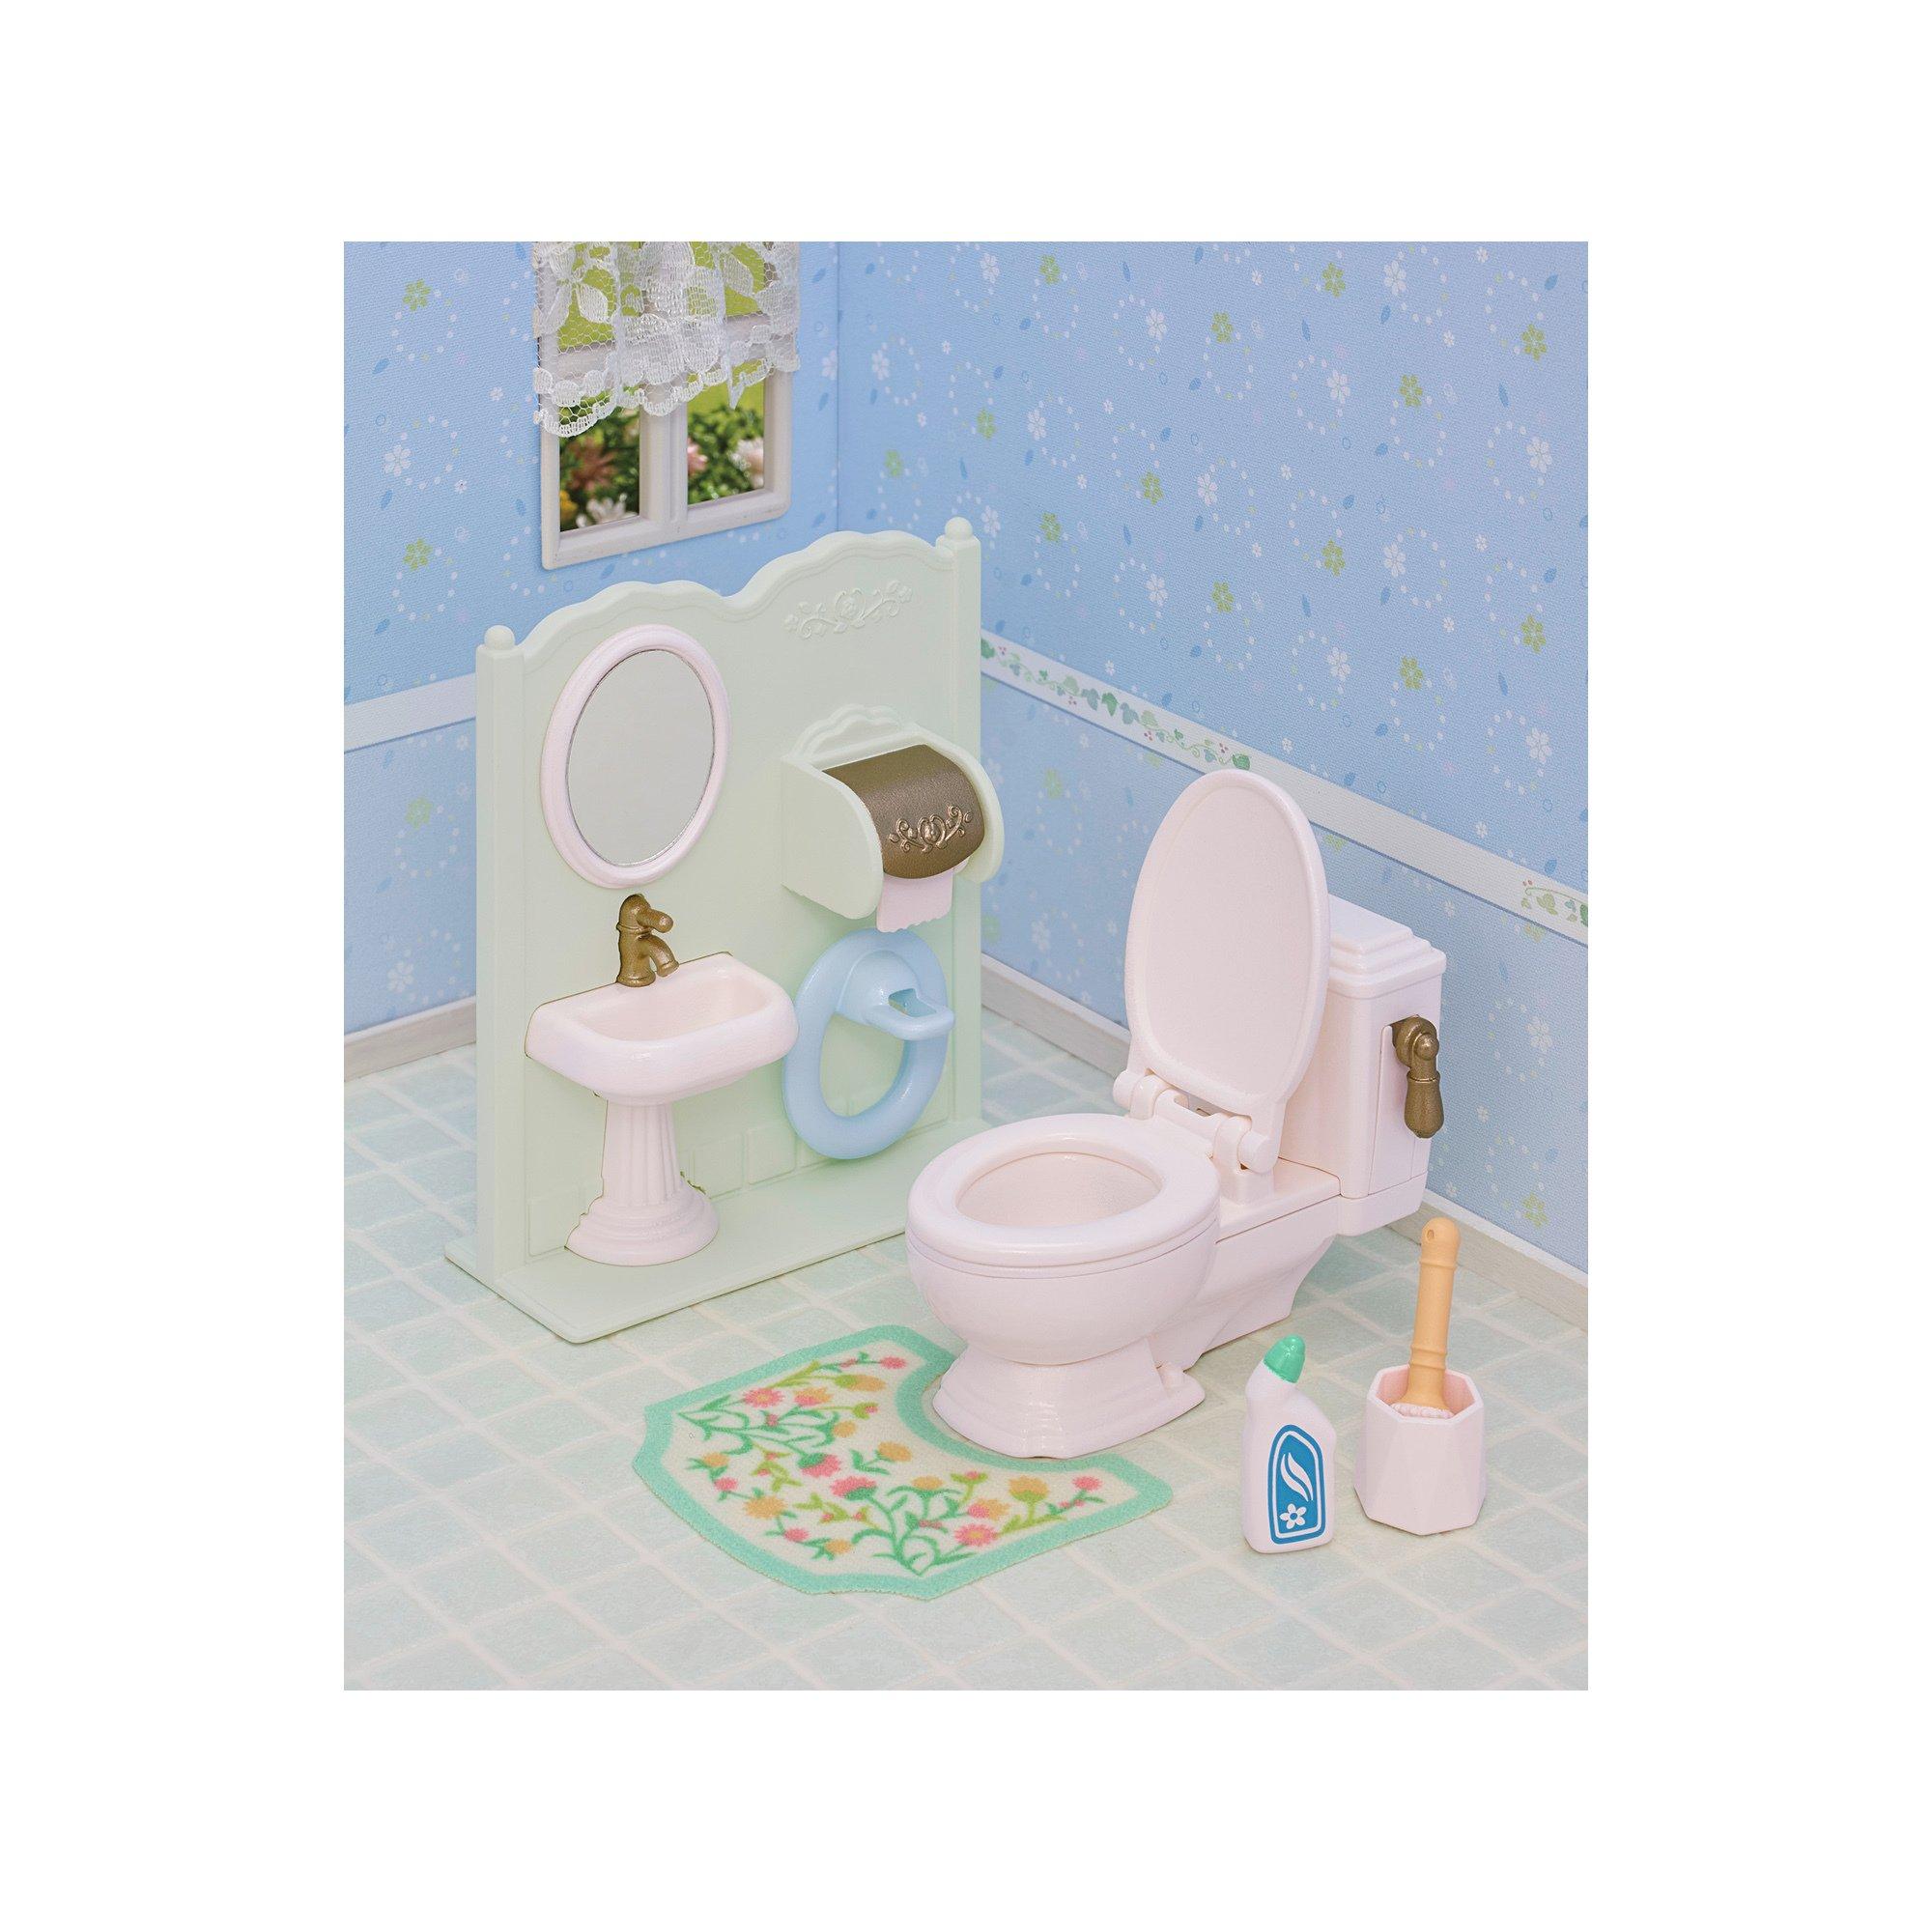 Sylvanian Families  Toiletten-Set 